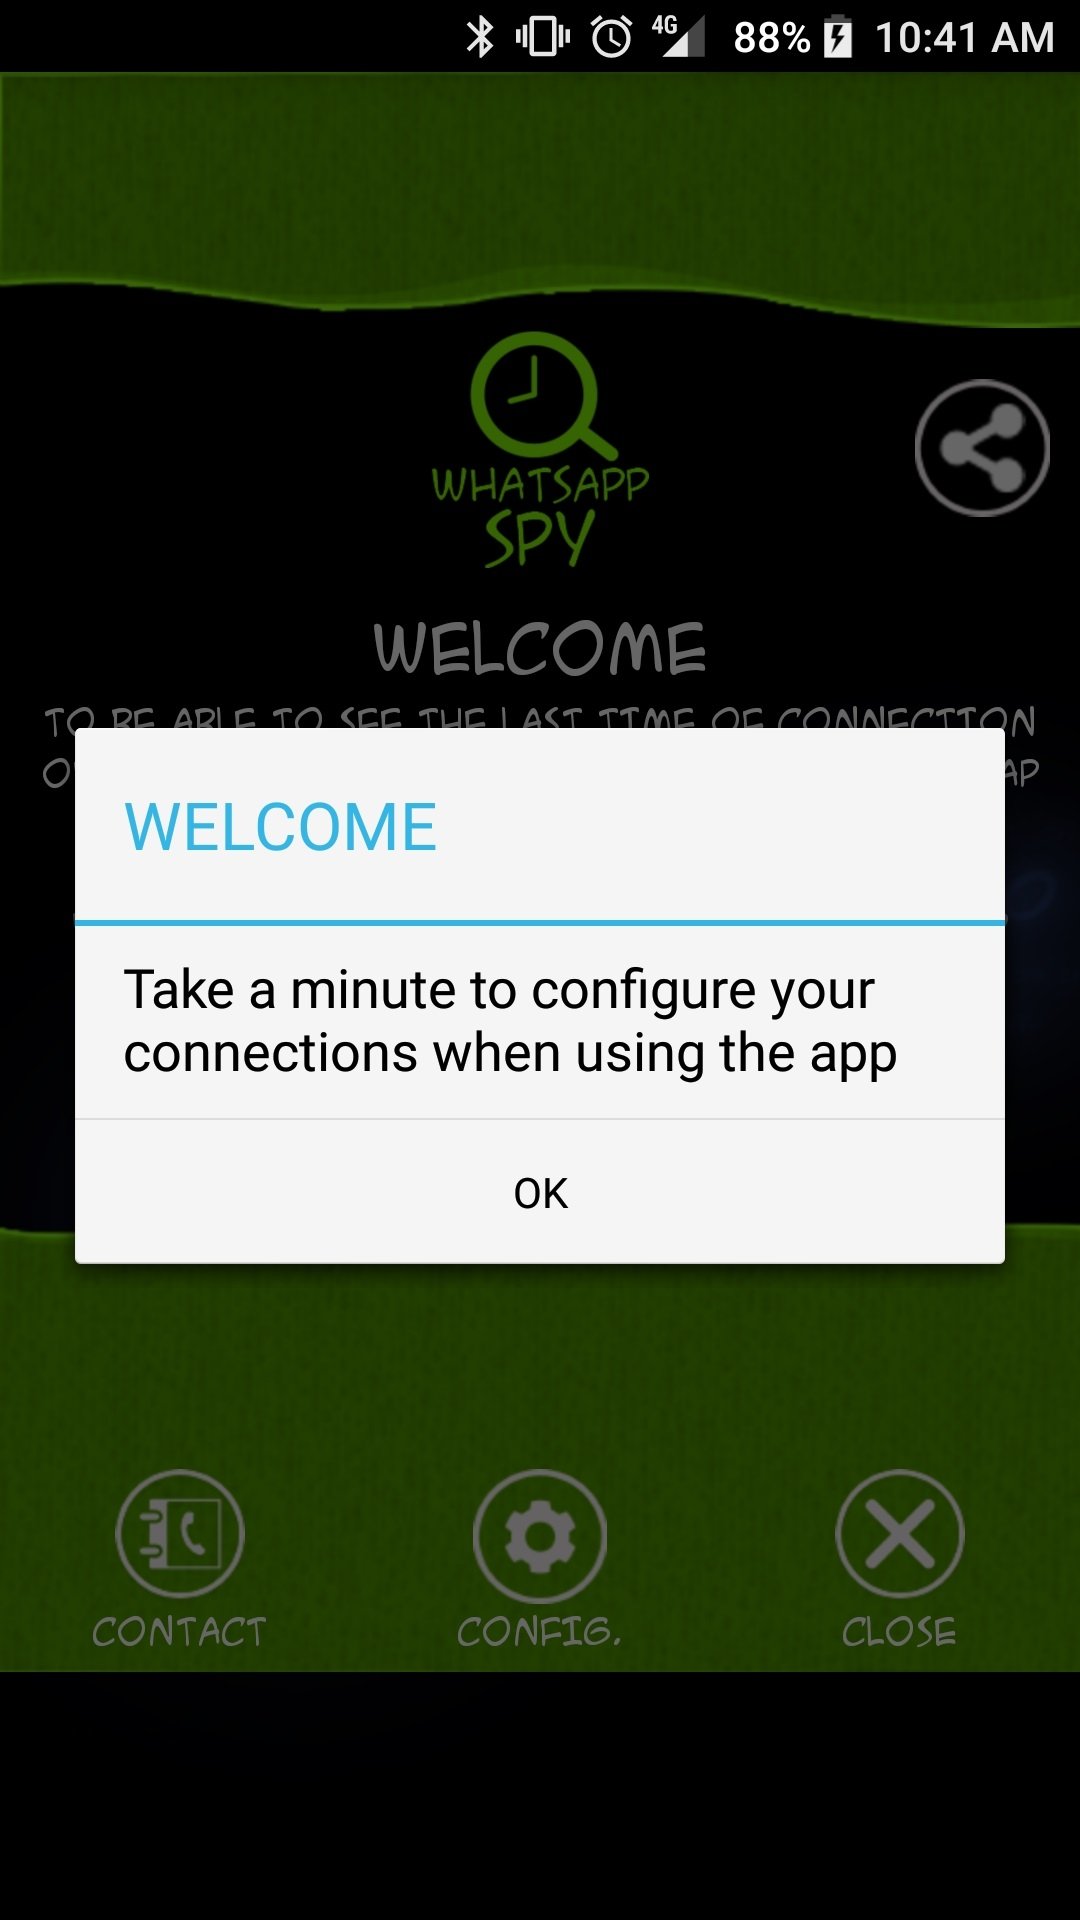 Whatsapp spy apk para android - descargar gratis